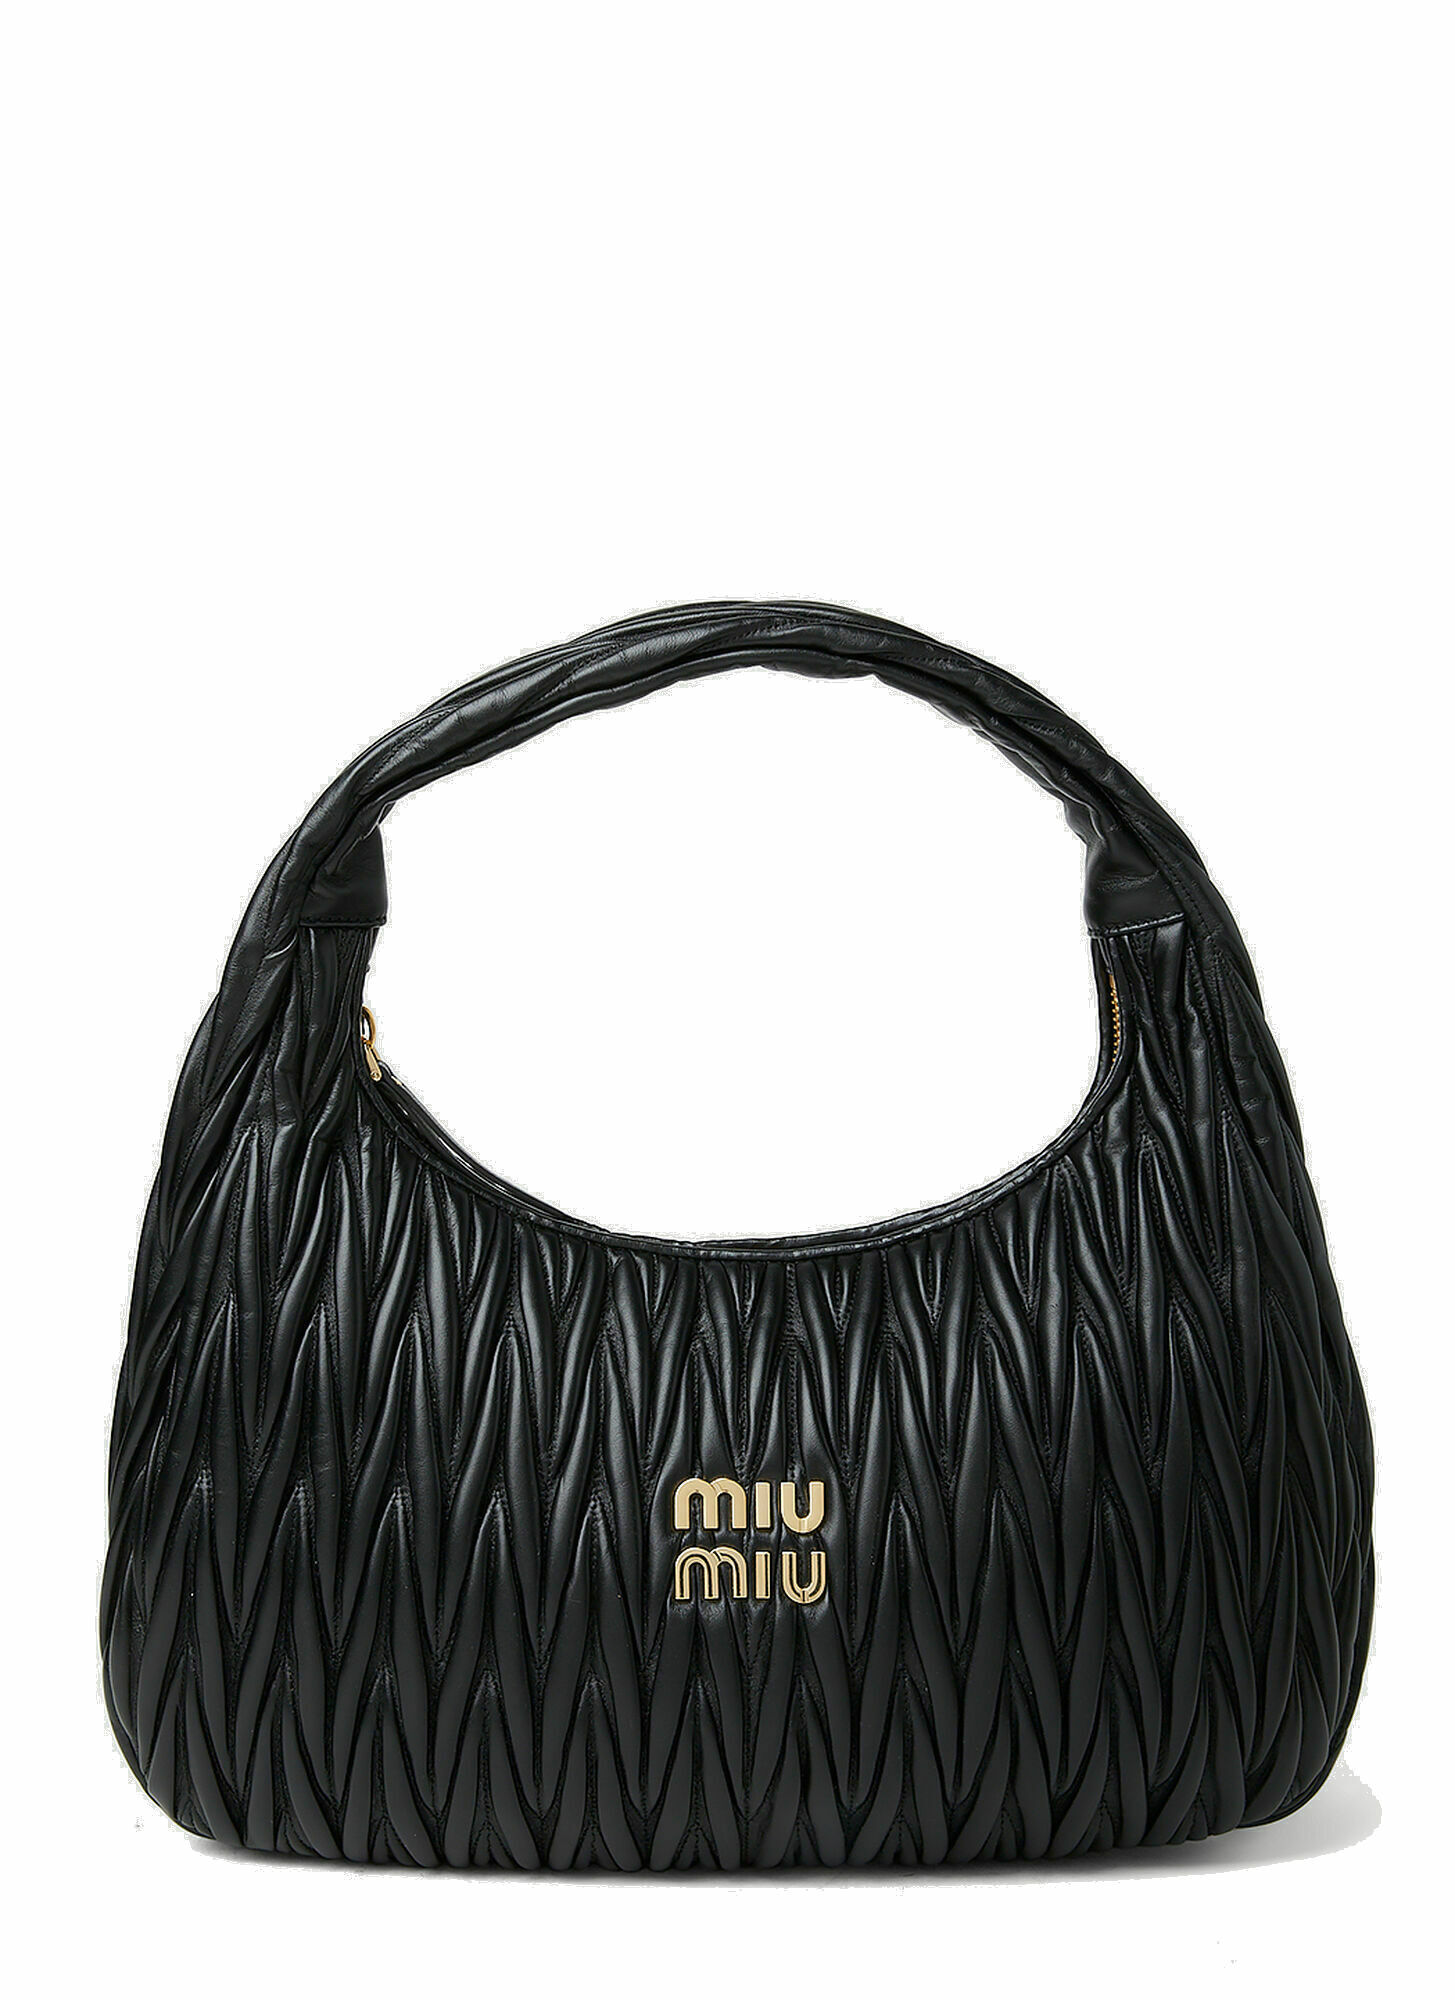 Miu Miu - Wander Hobo Bag in Black Miu Miu